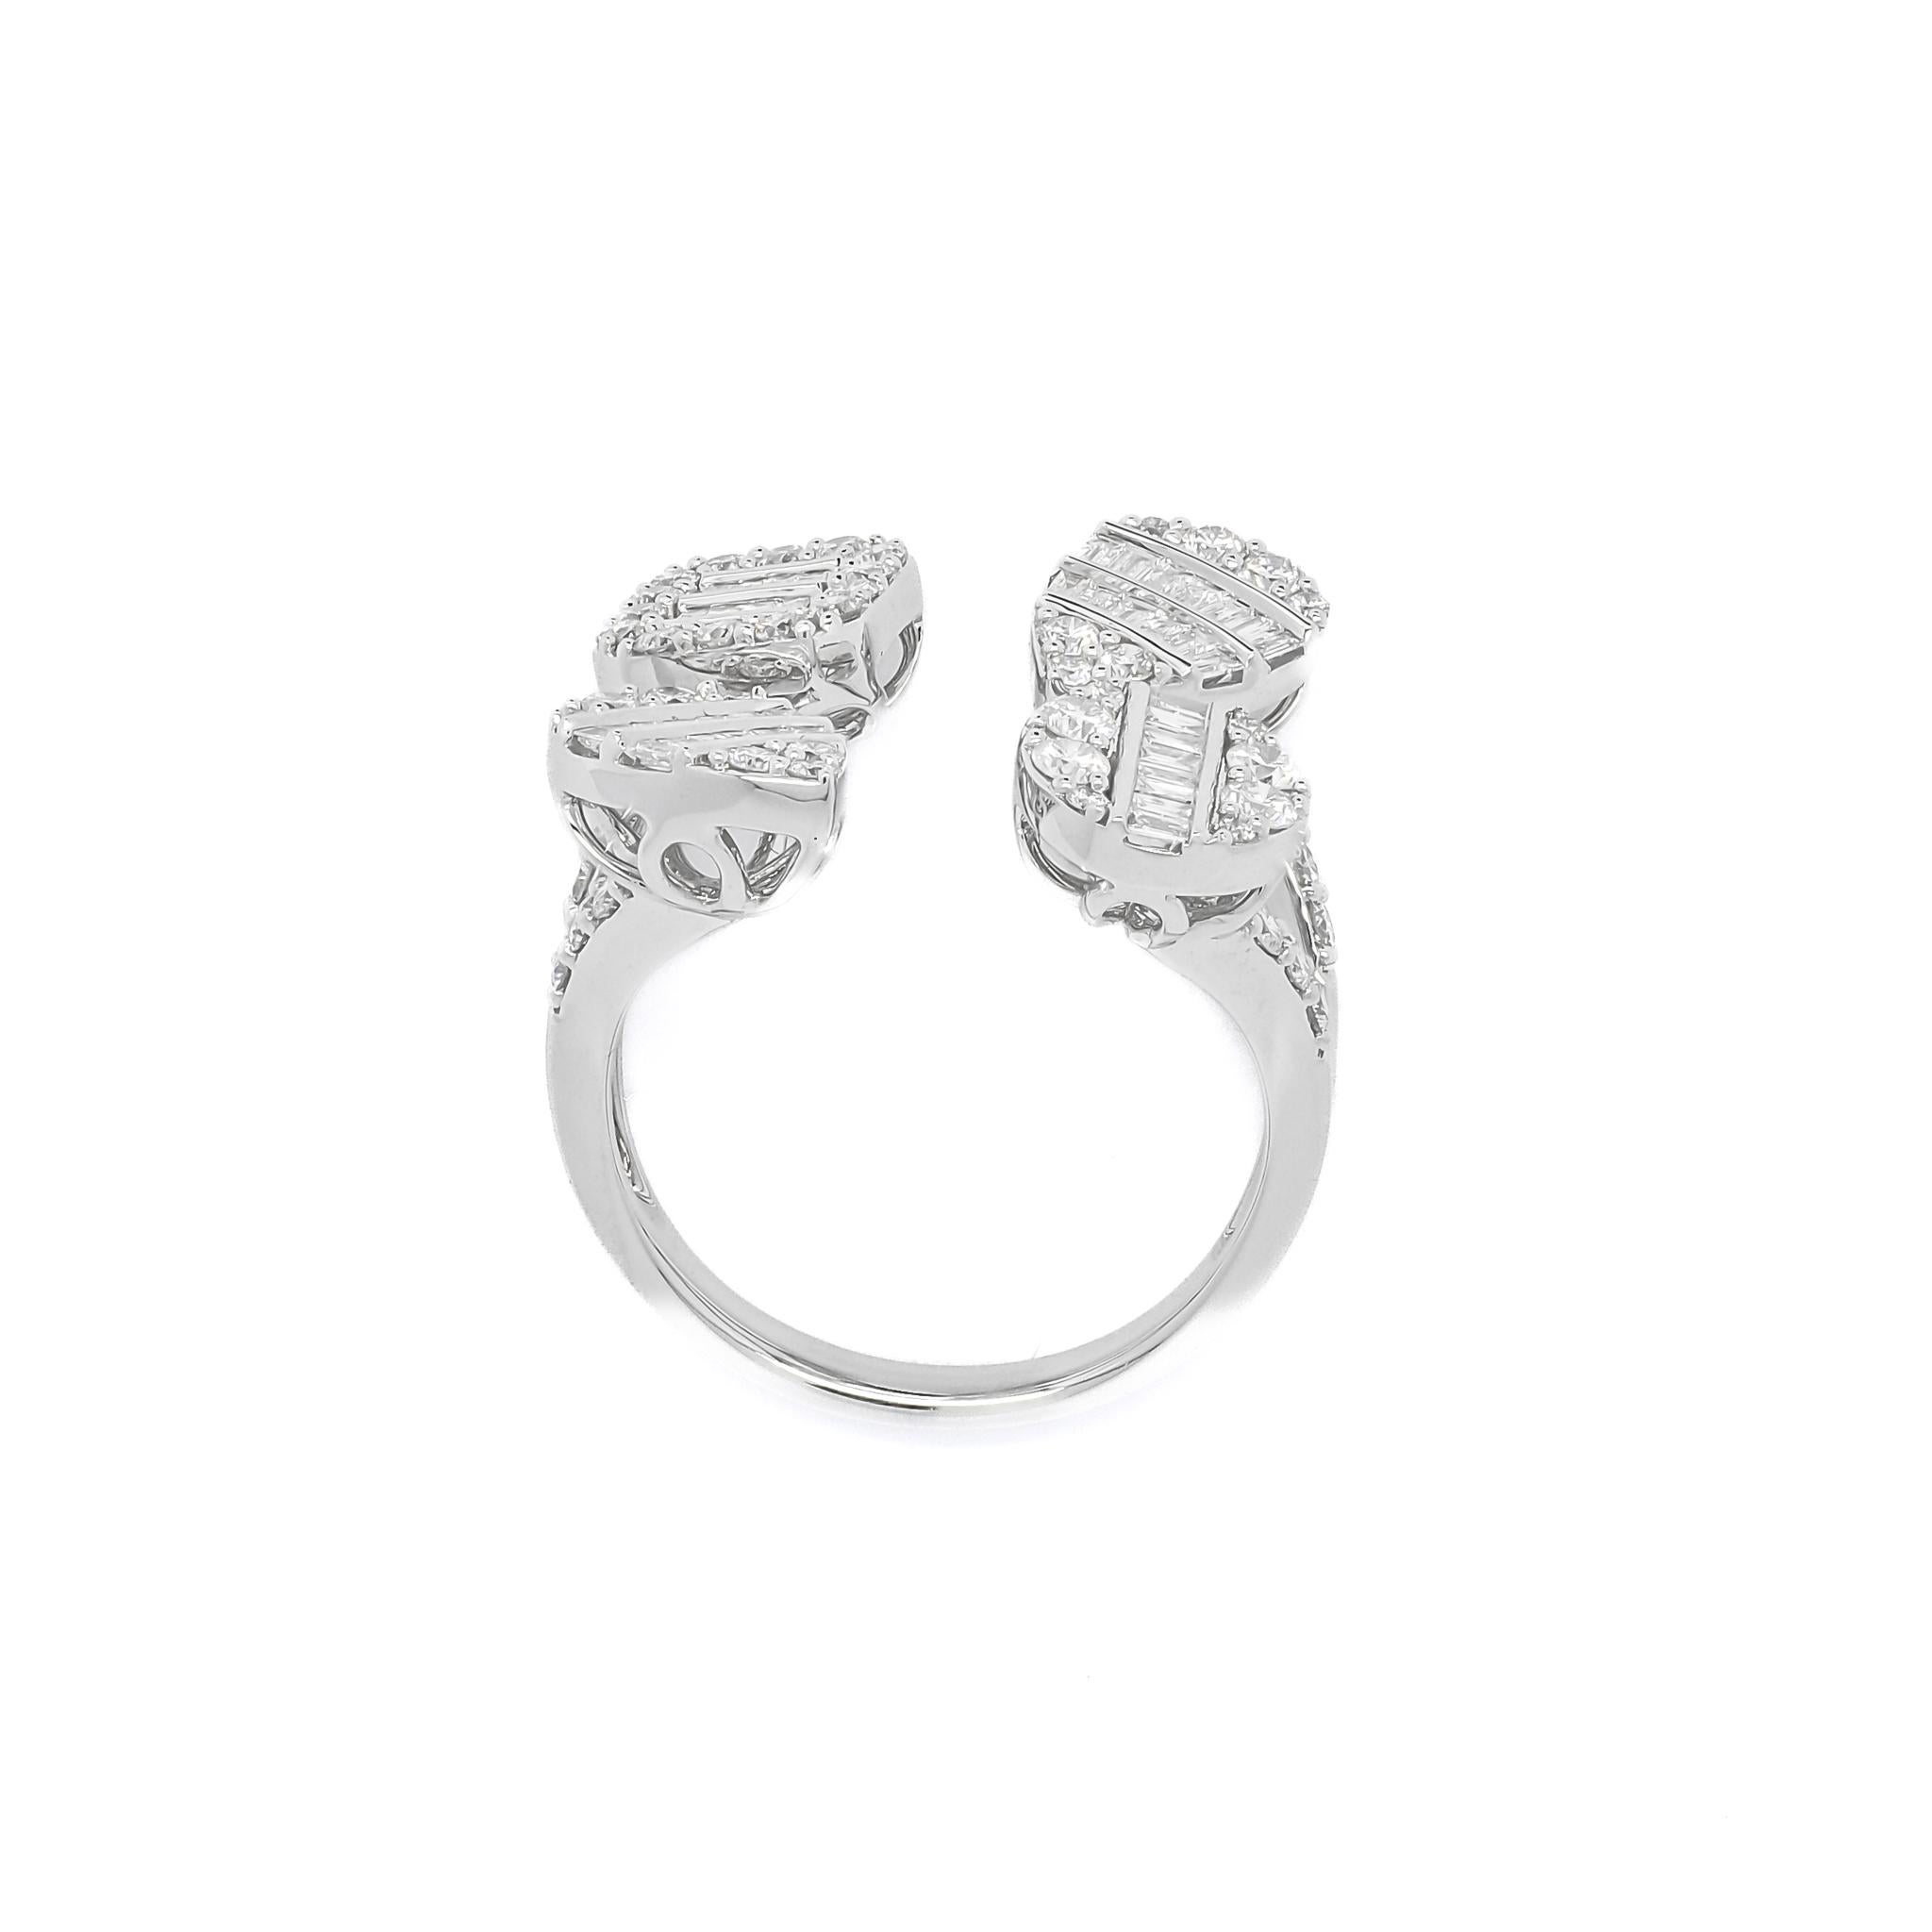 Round Cut Natural Diamond Ring 1.23 cts 18 Karat White Gold High Fashion Statement Ring For Sale